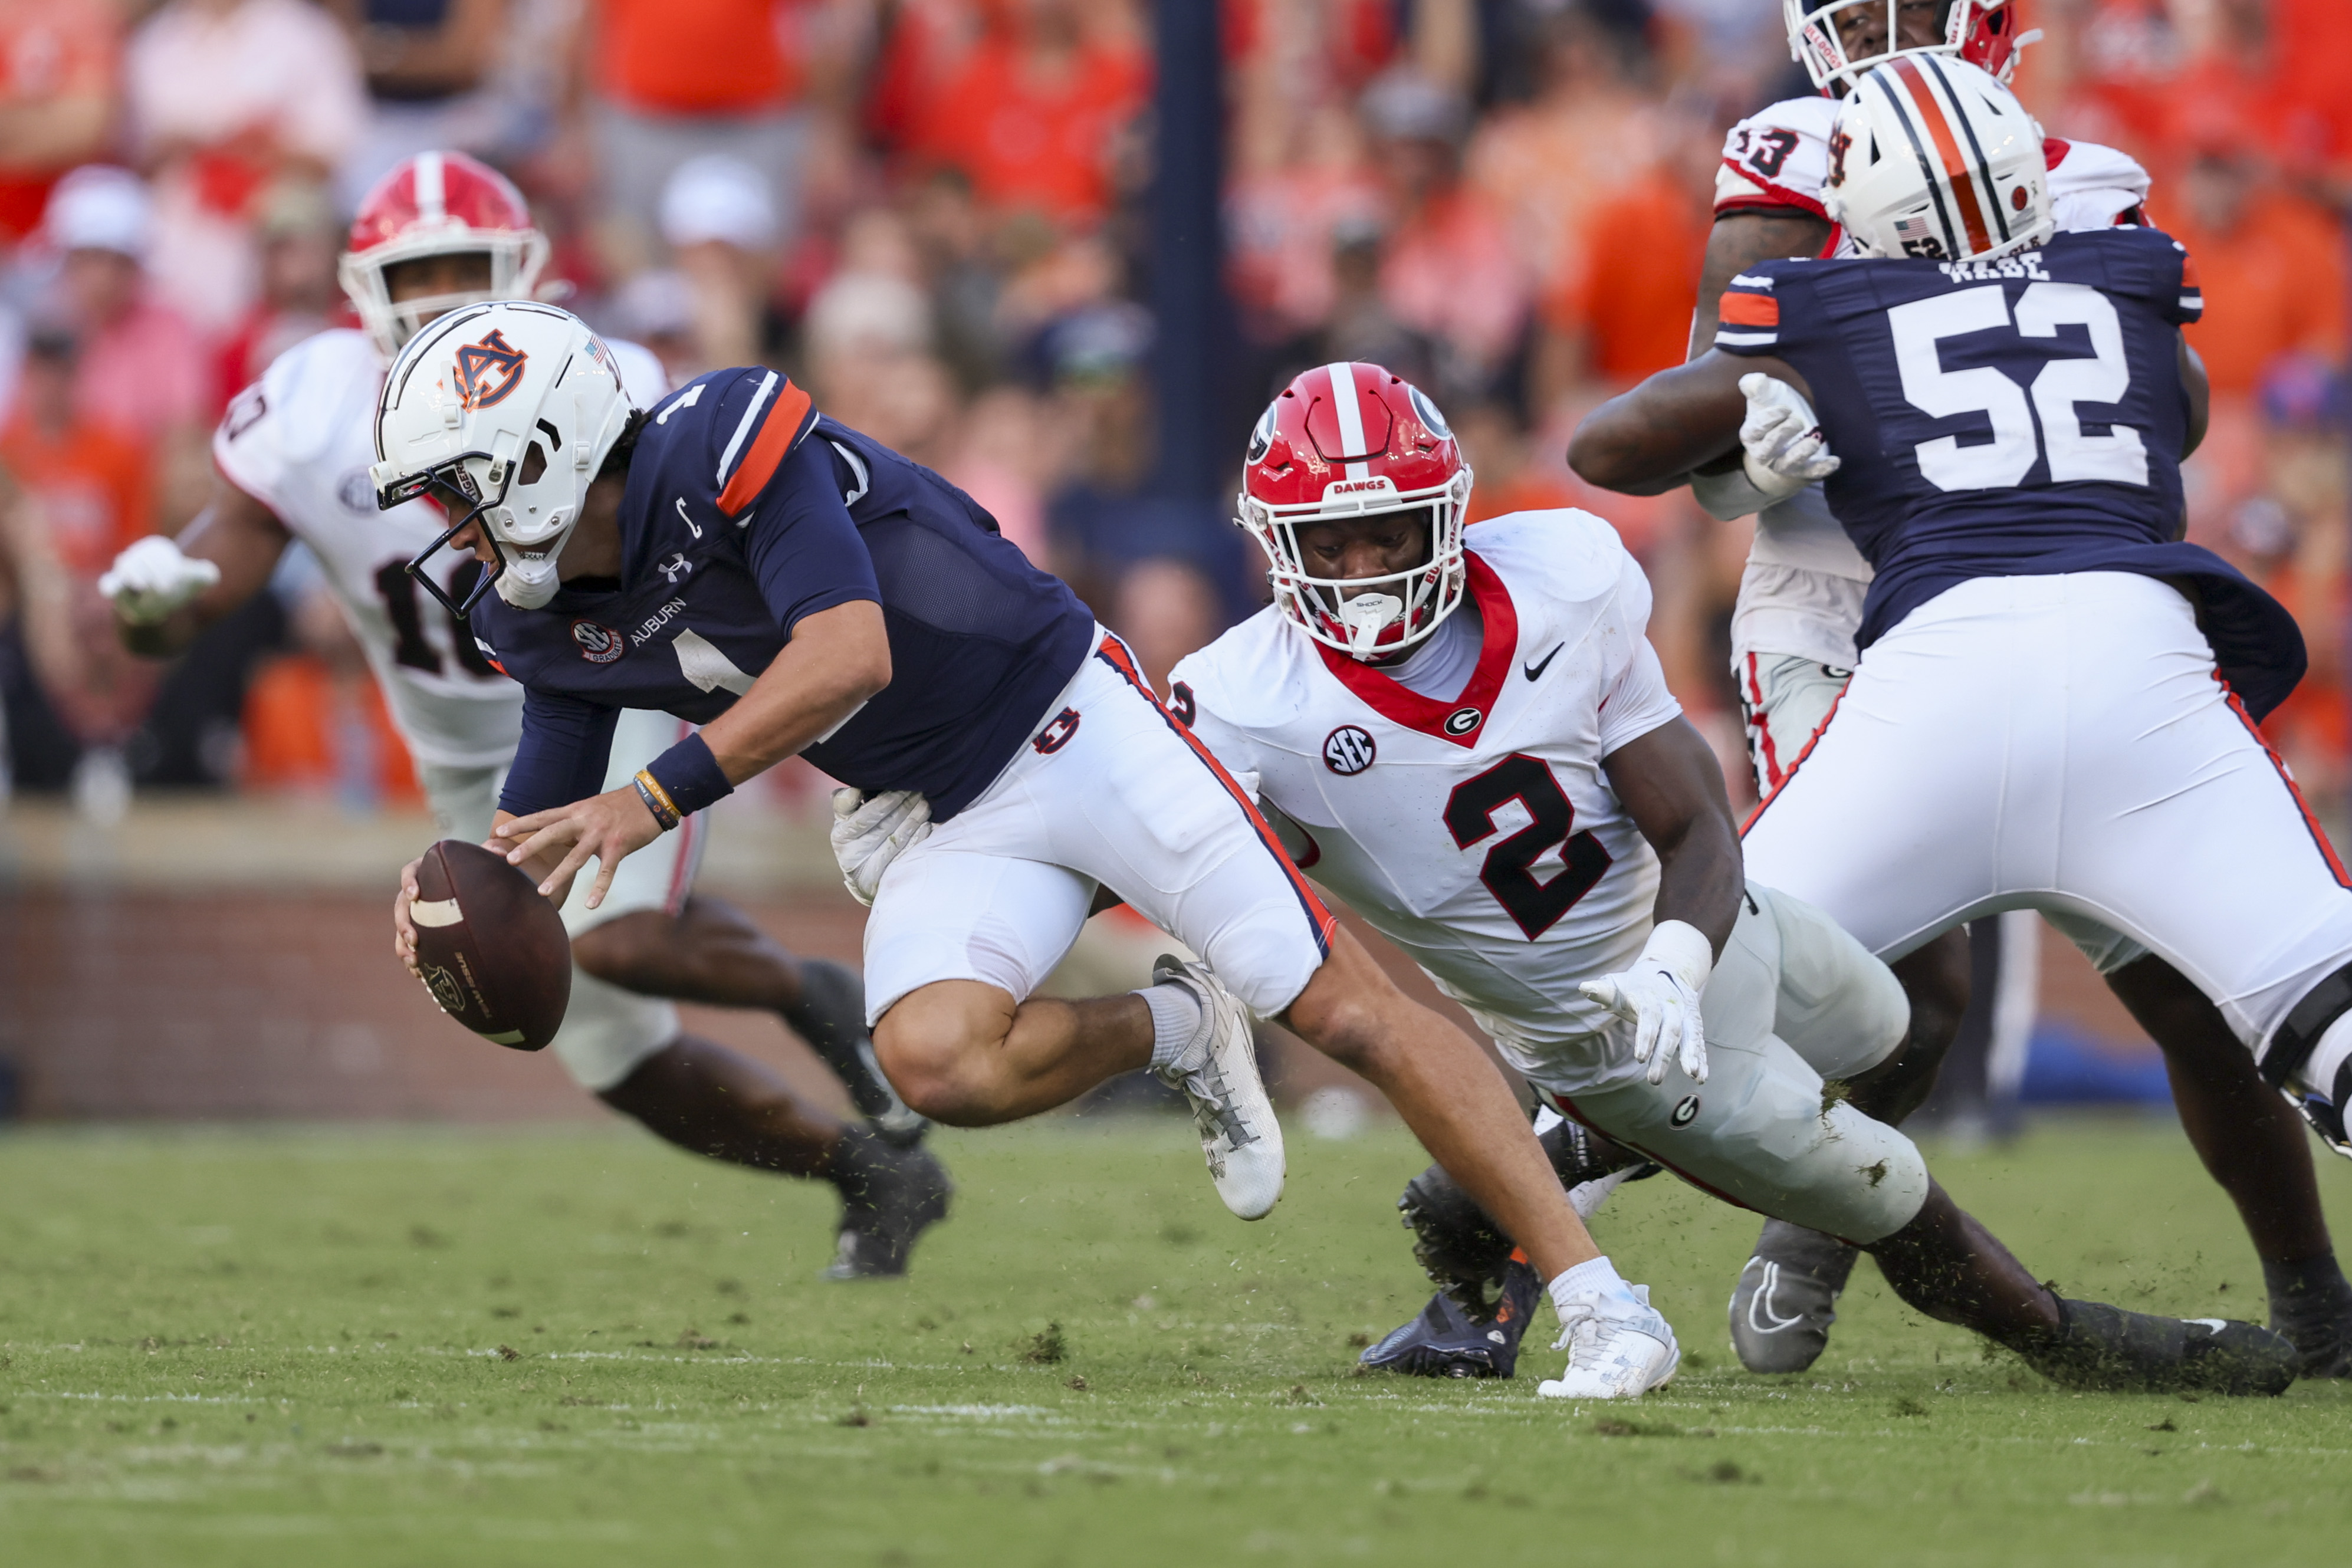 Auburn vs. Georgia 2020 score: Bulldogs roll over Tigers - Team